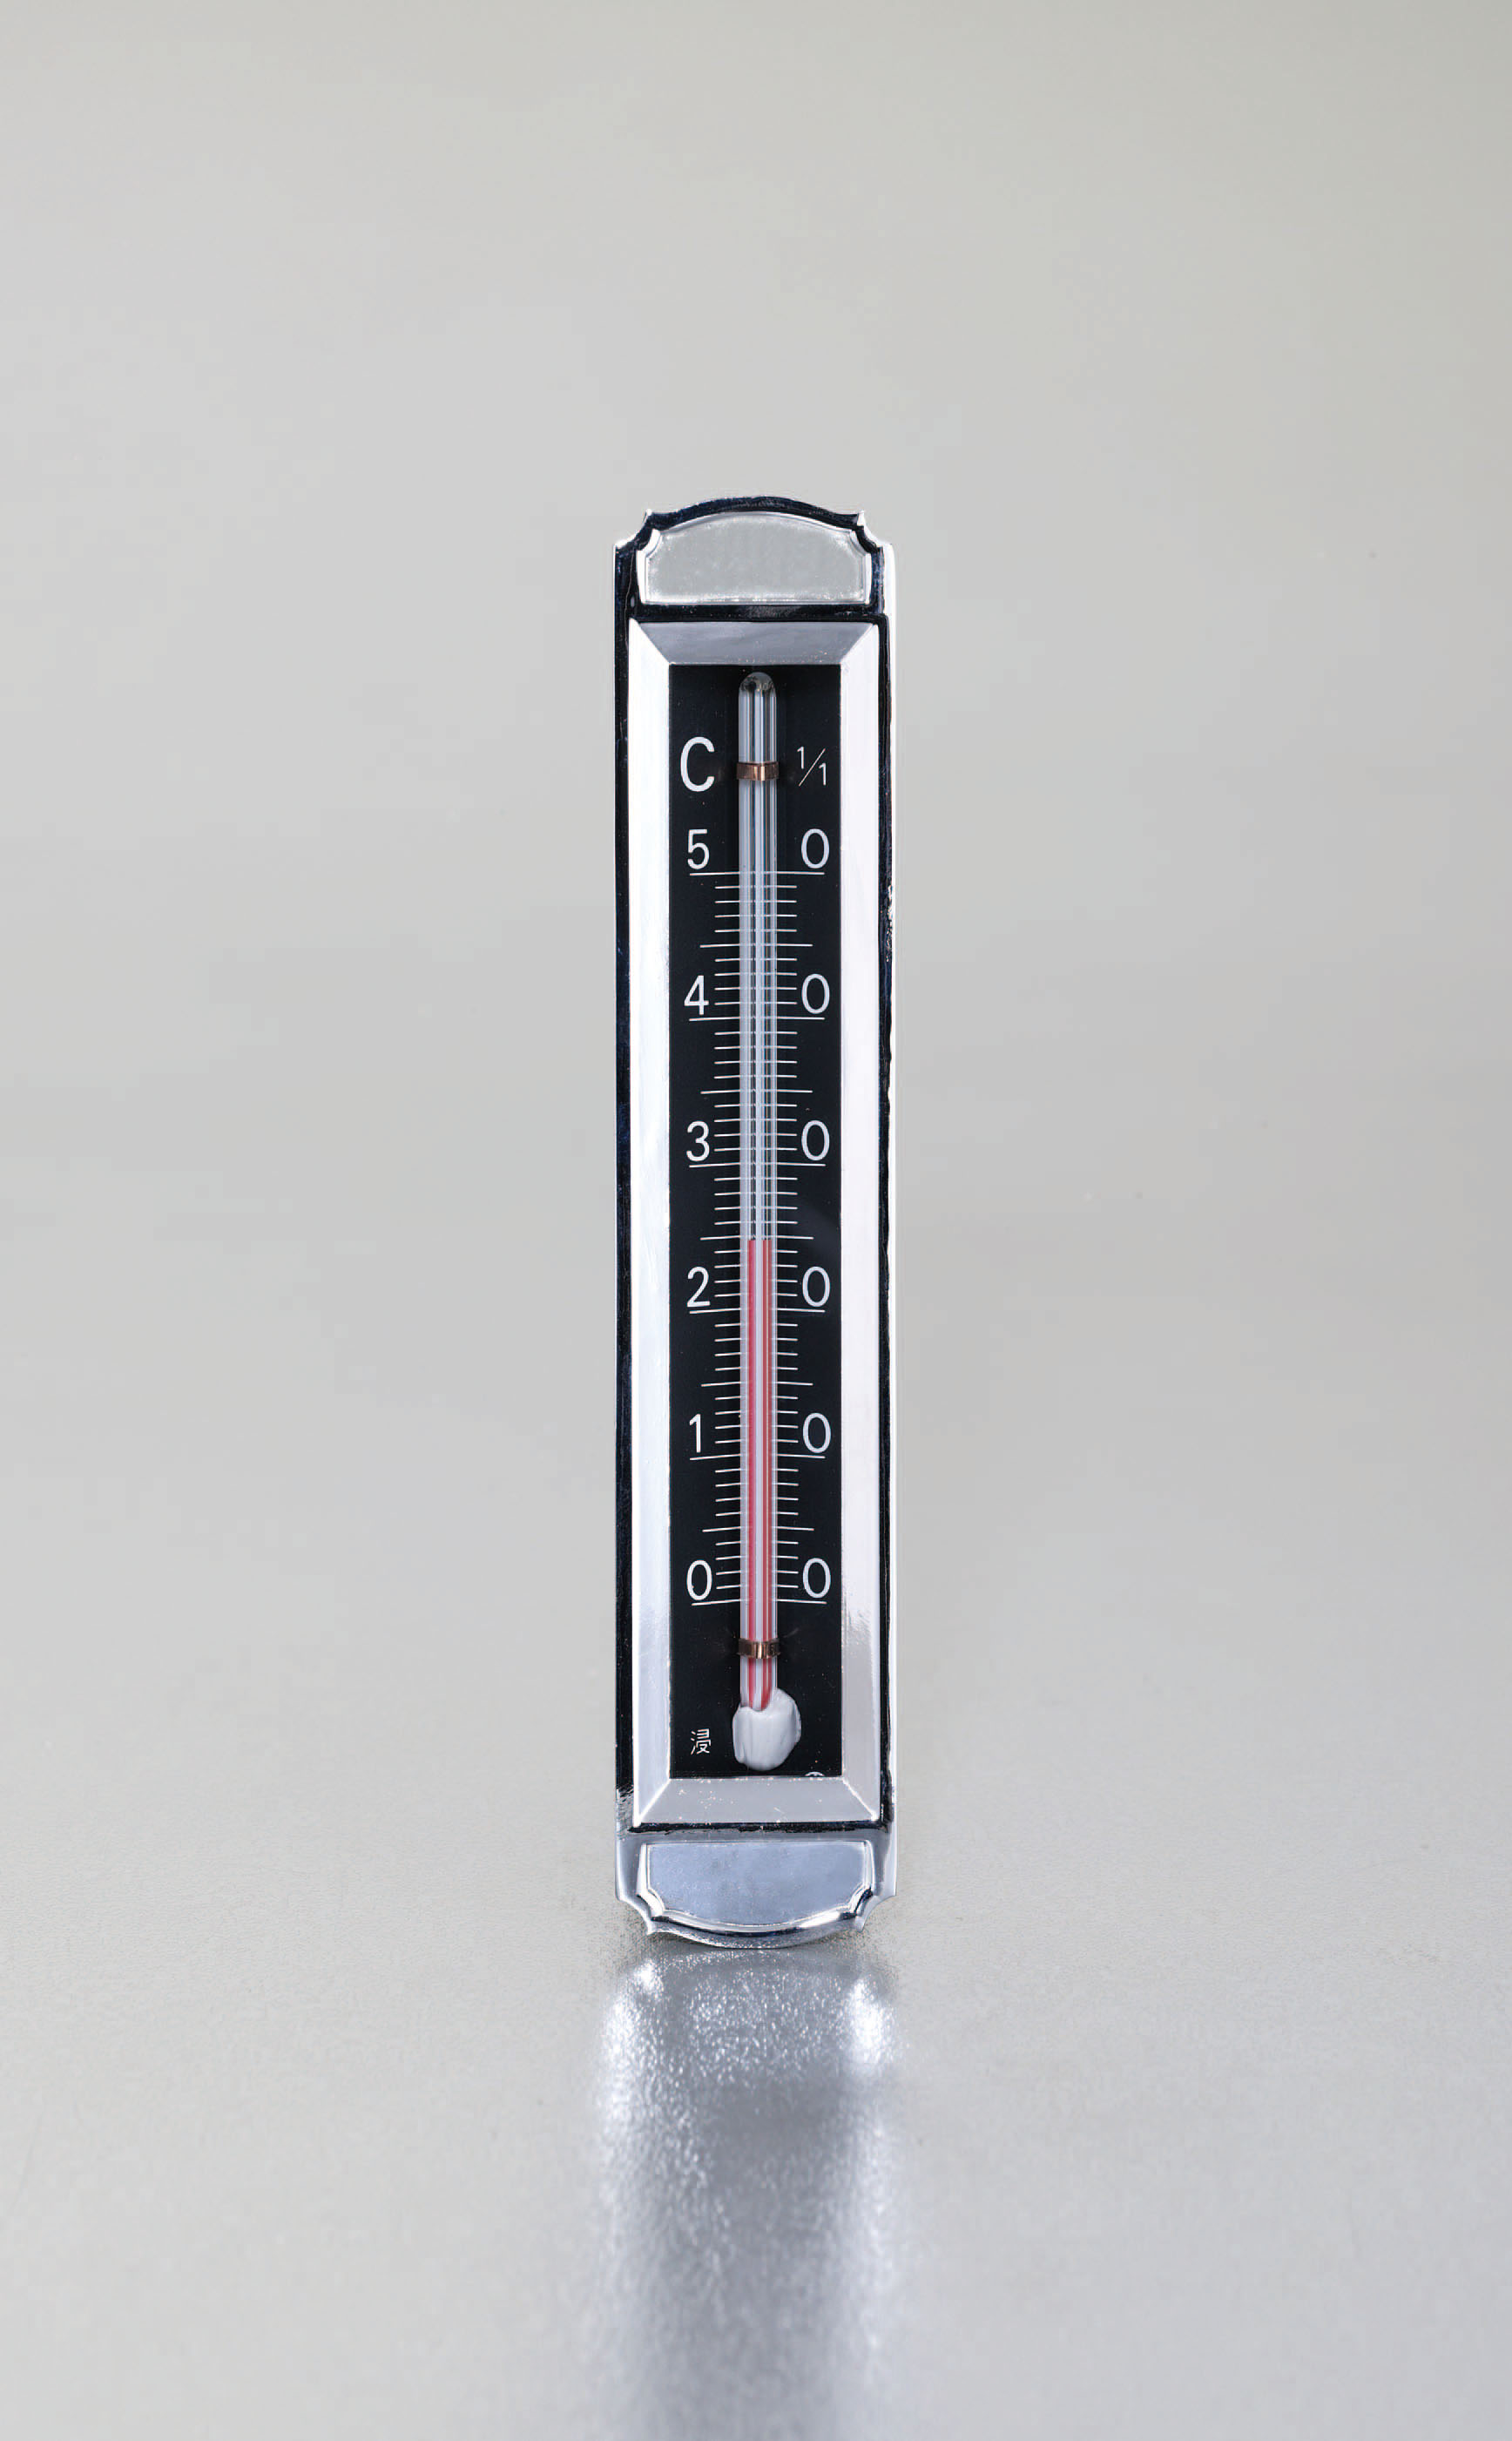 0- 50℃/100mm バイメタル式温度計 EA727AA-72 エスコ ESCO